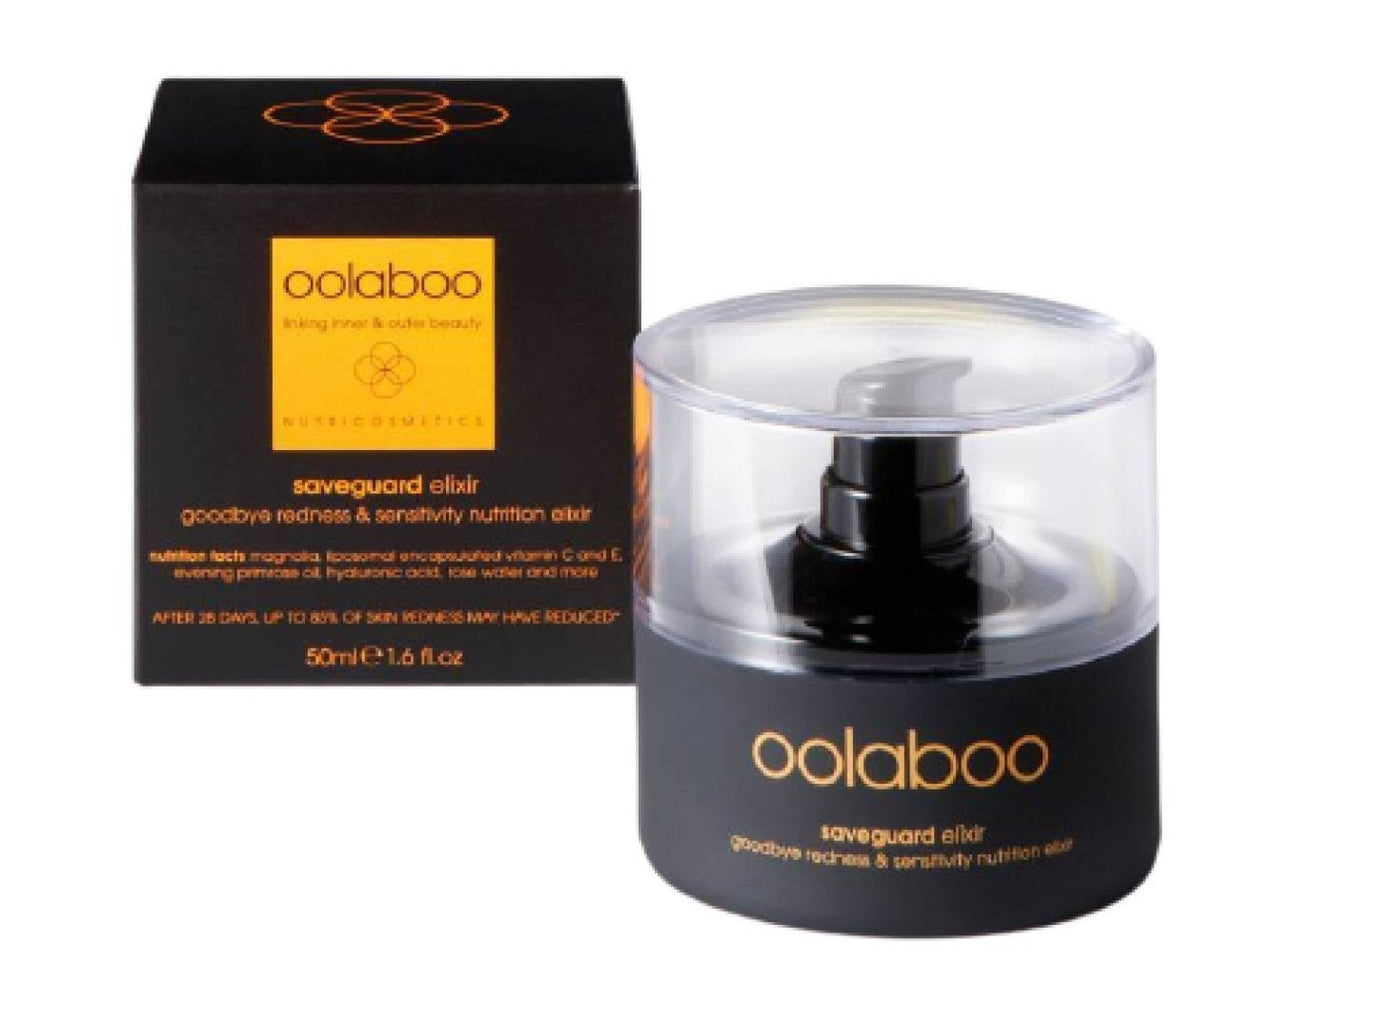 Oolaboo Saveguard Elixir 50 ml - Salon Warehouse